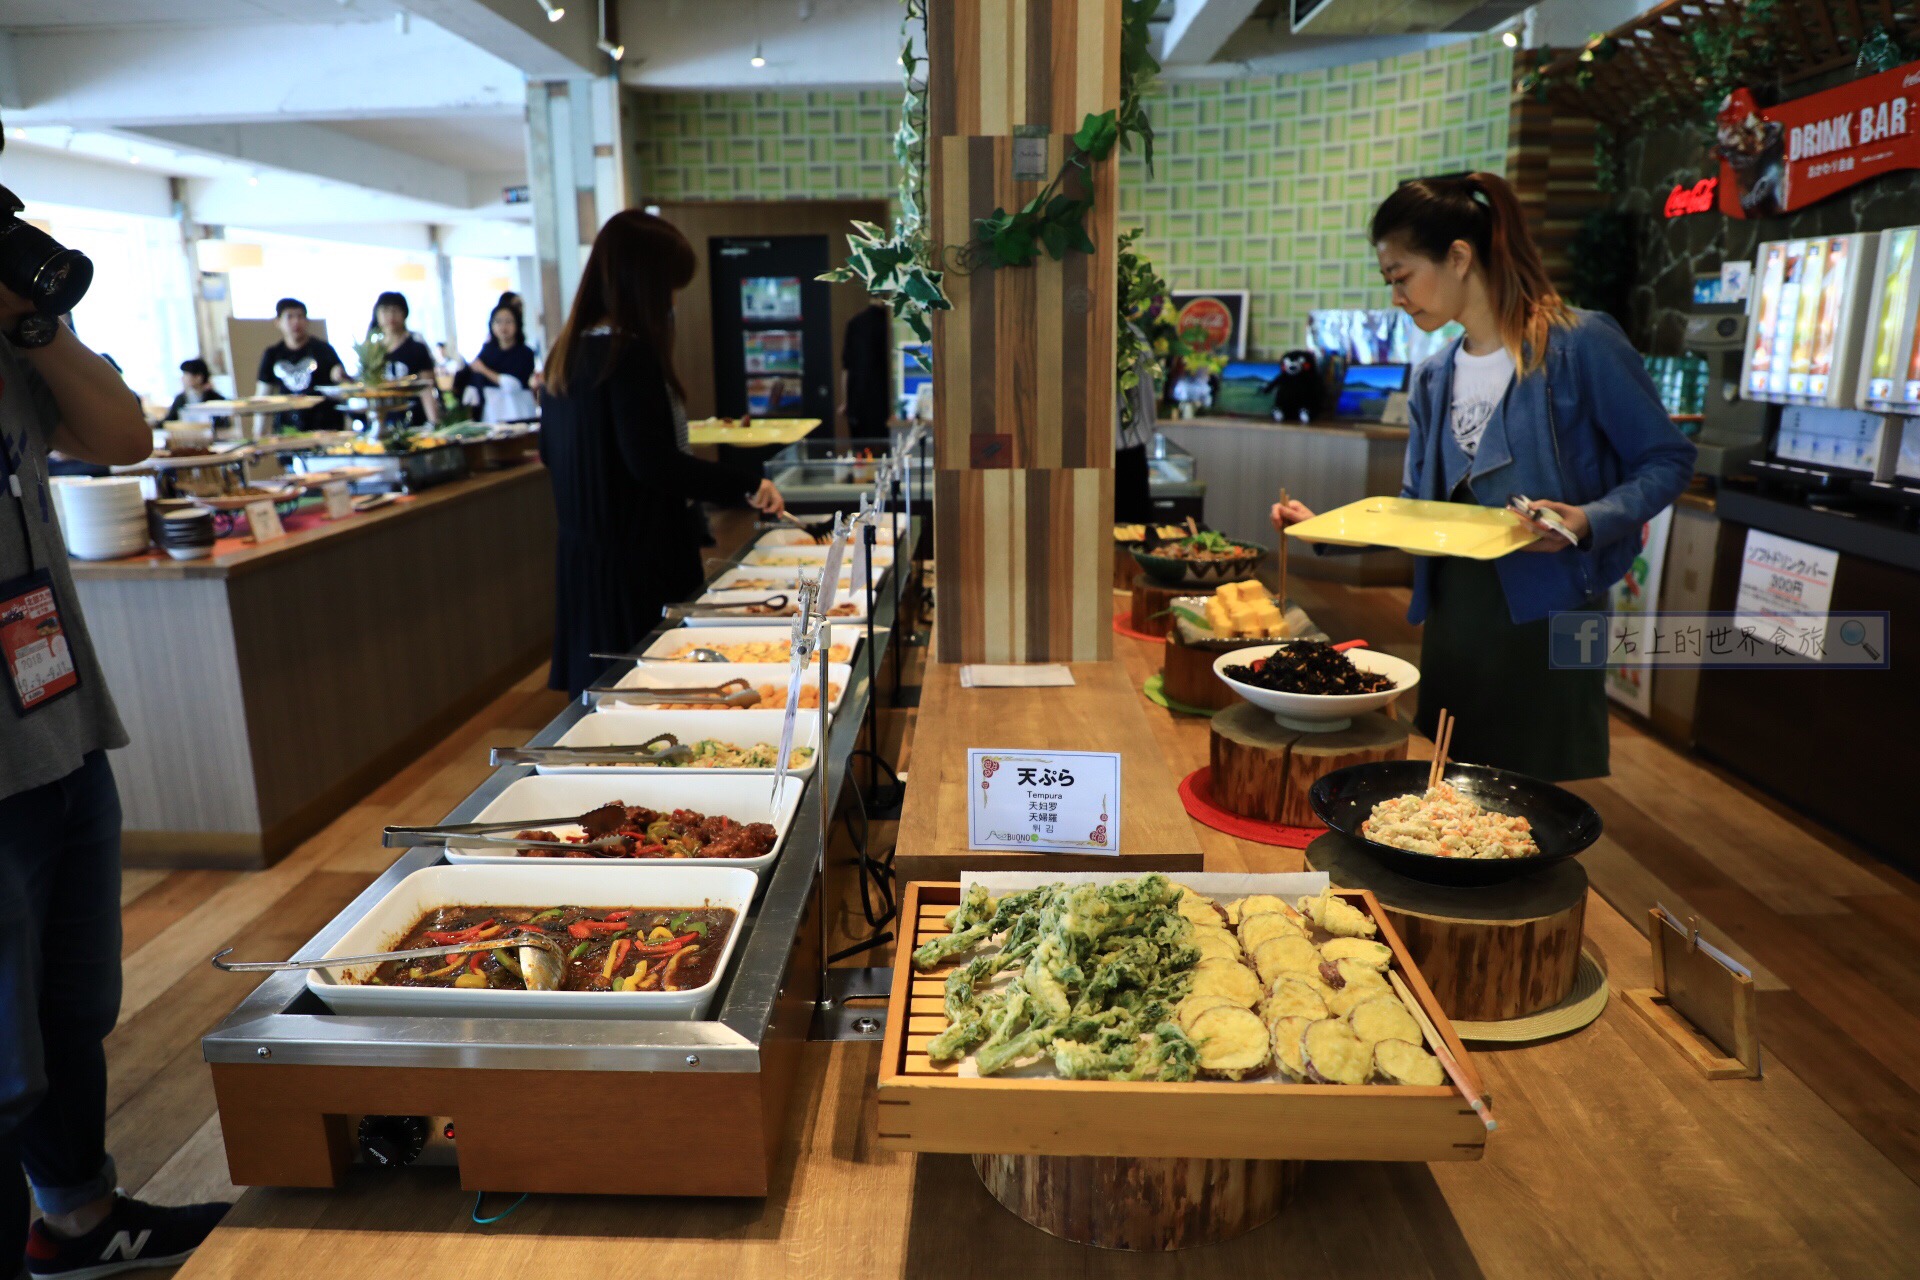 SUNQPASS玩遍九州-福岡．大分．日田．熊本．阿蘇6天溫泉美食行程 @右上世界食旅